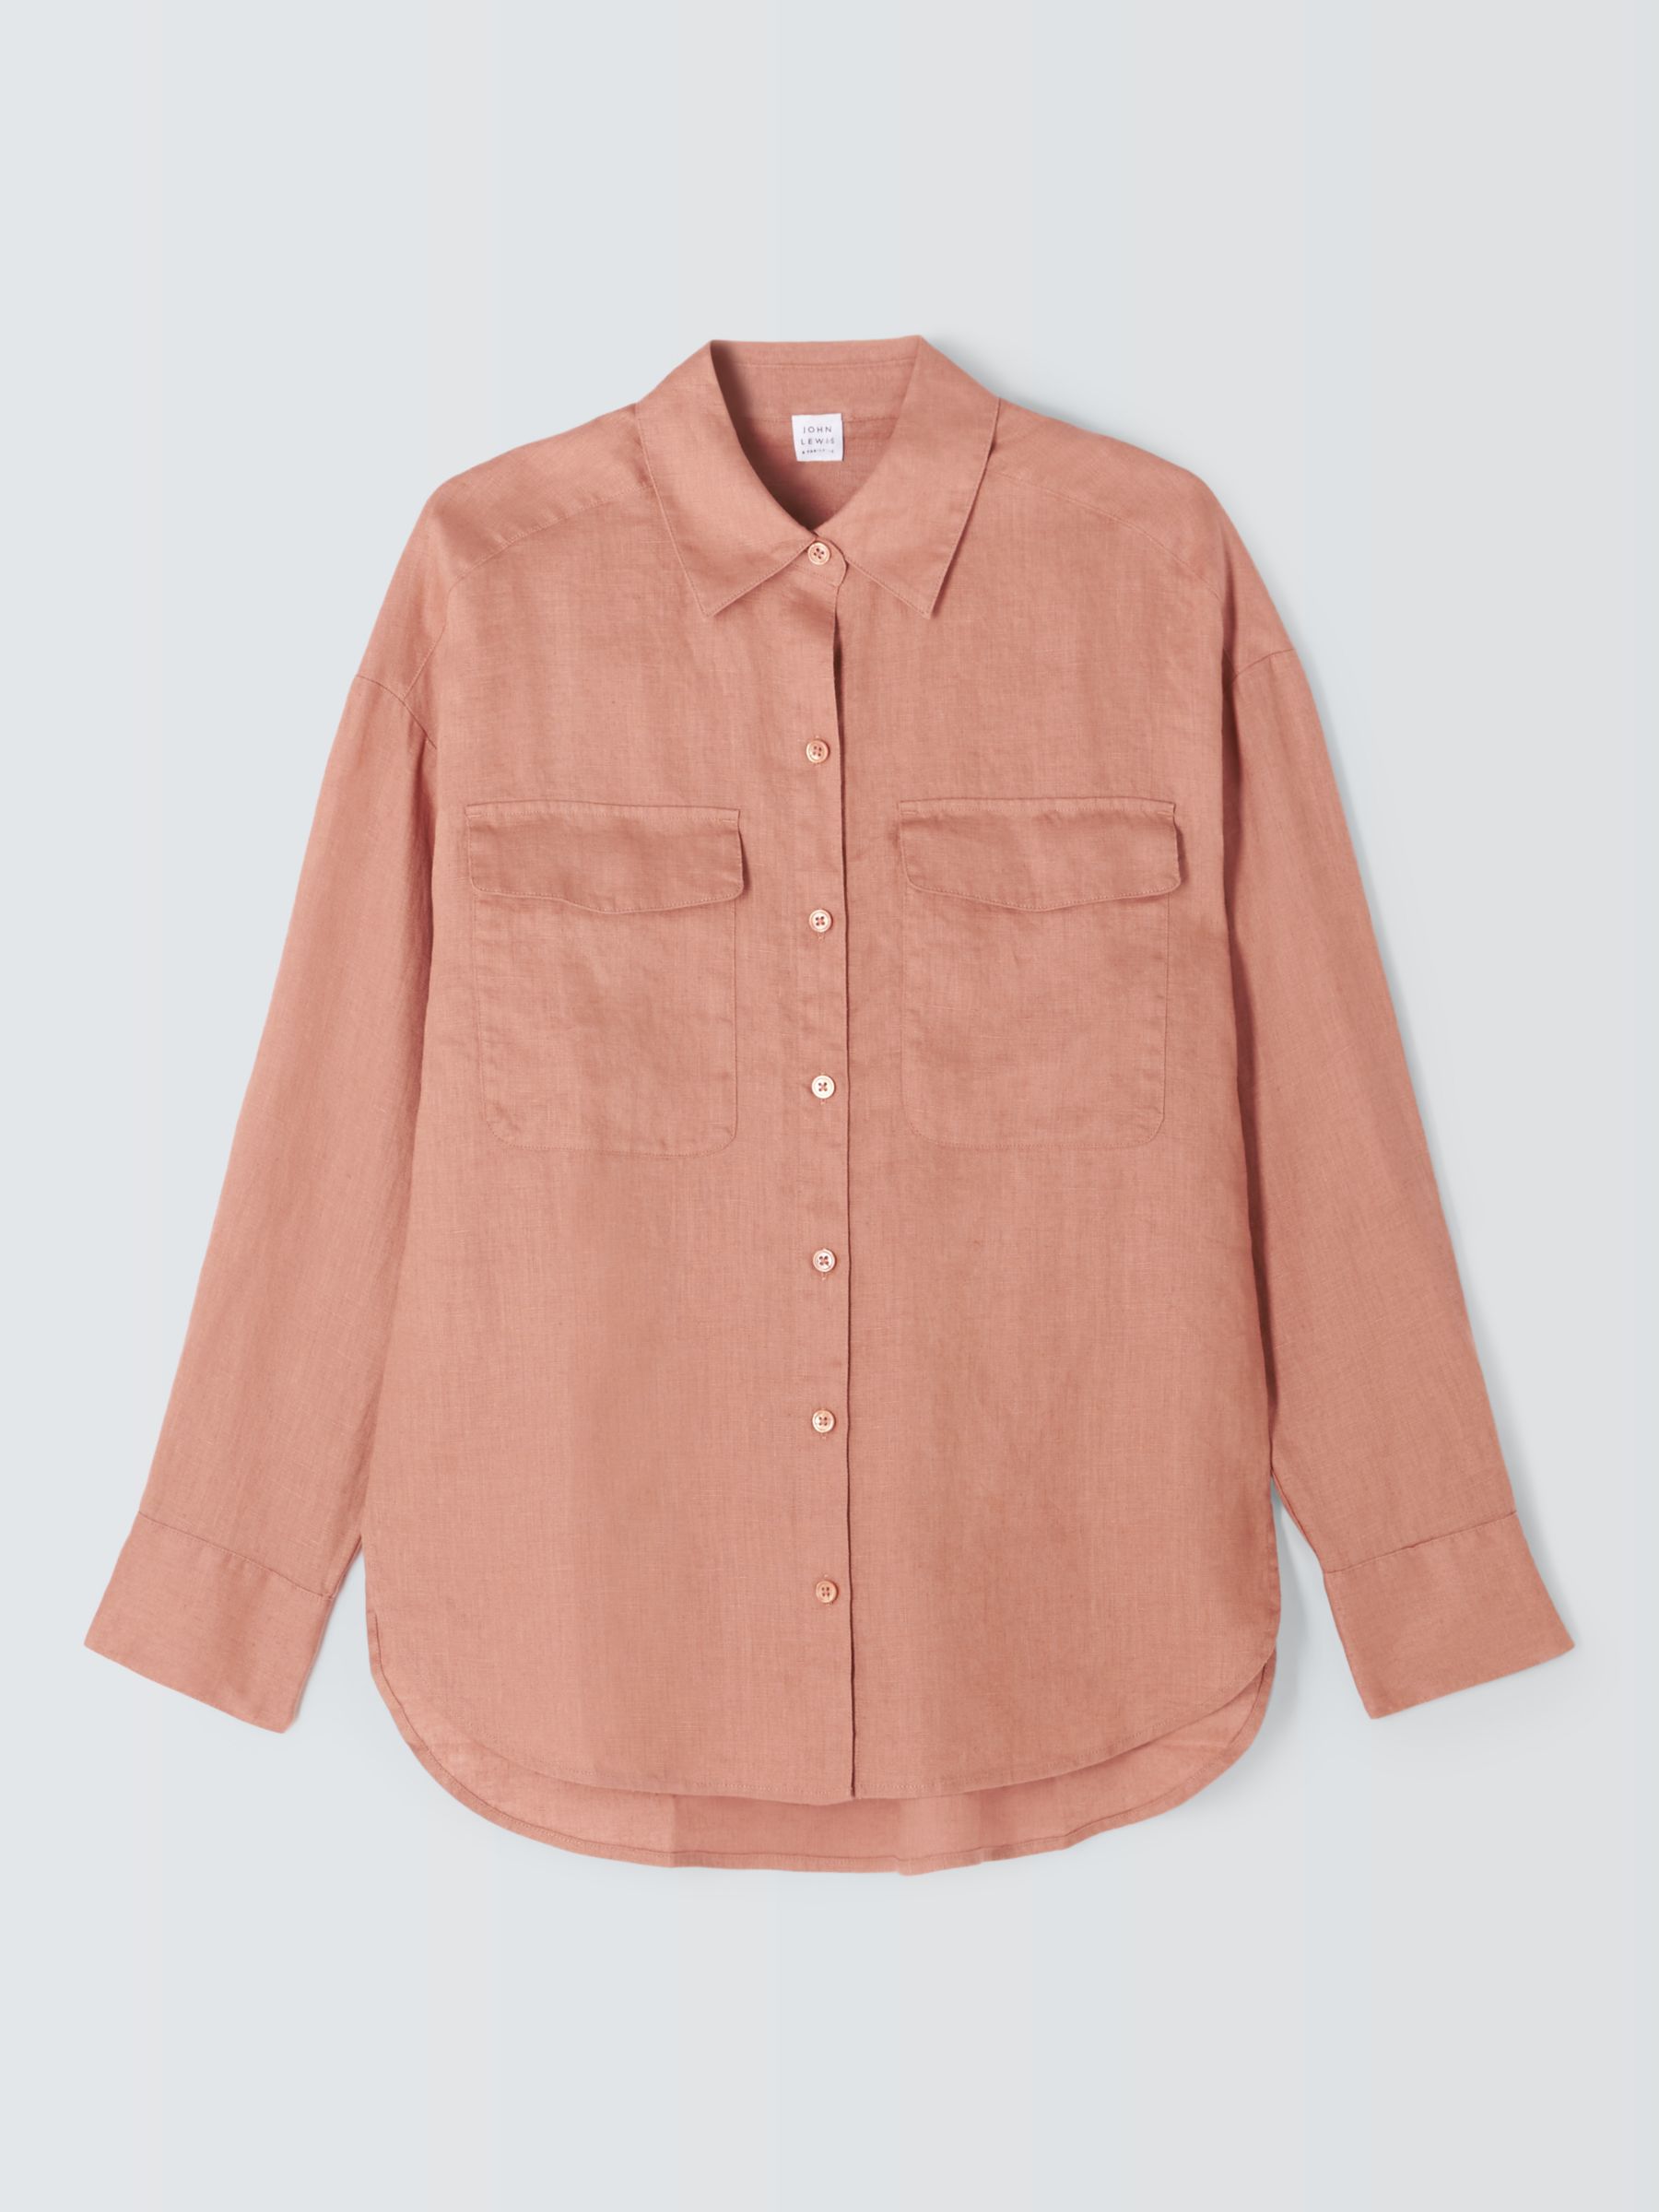 Buy John Lewis Linen Button Down Shirt Online at johnlewis.com